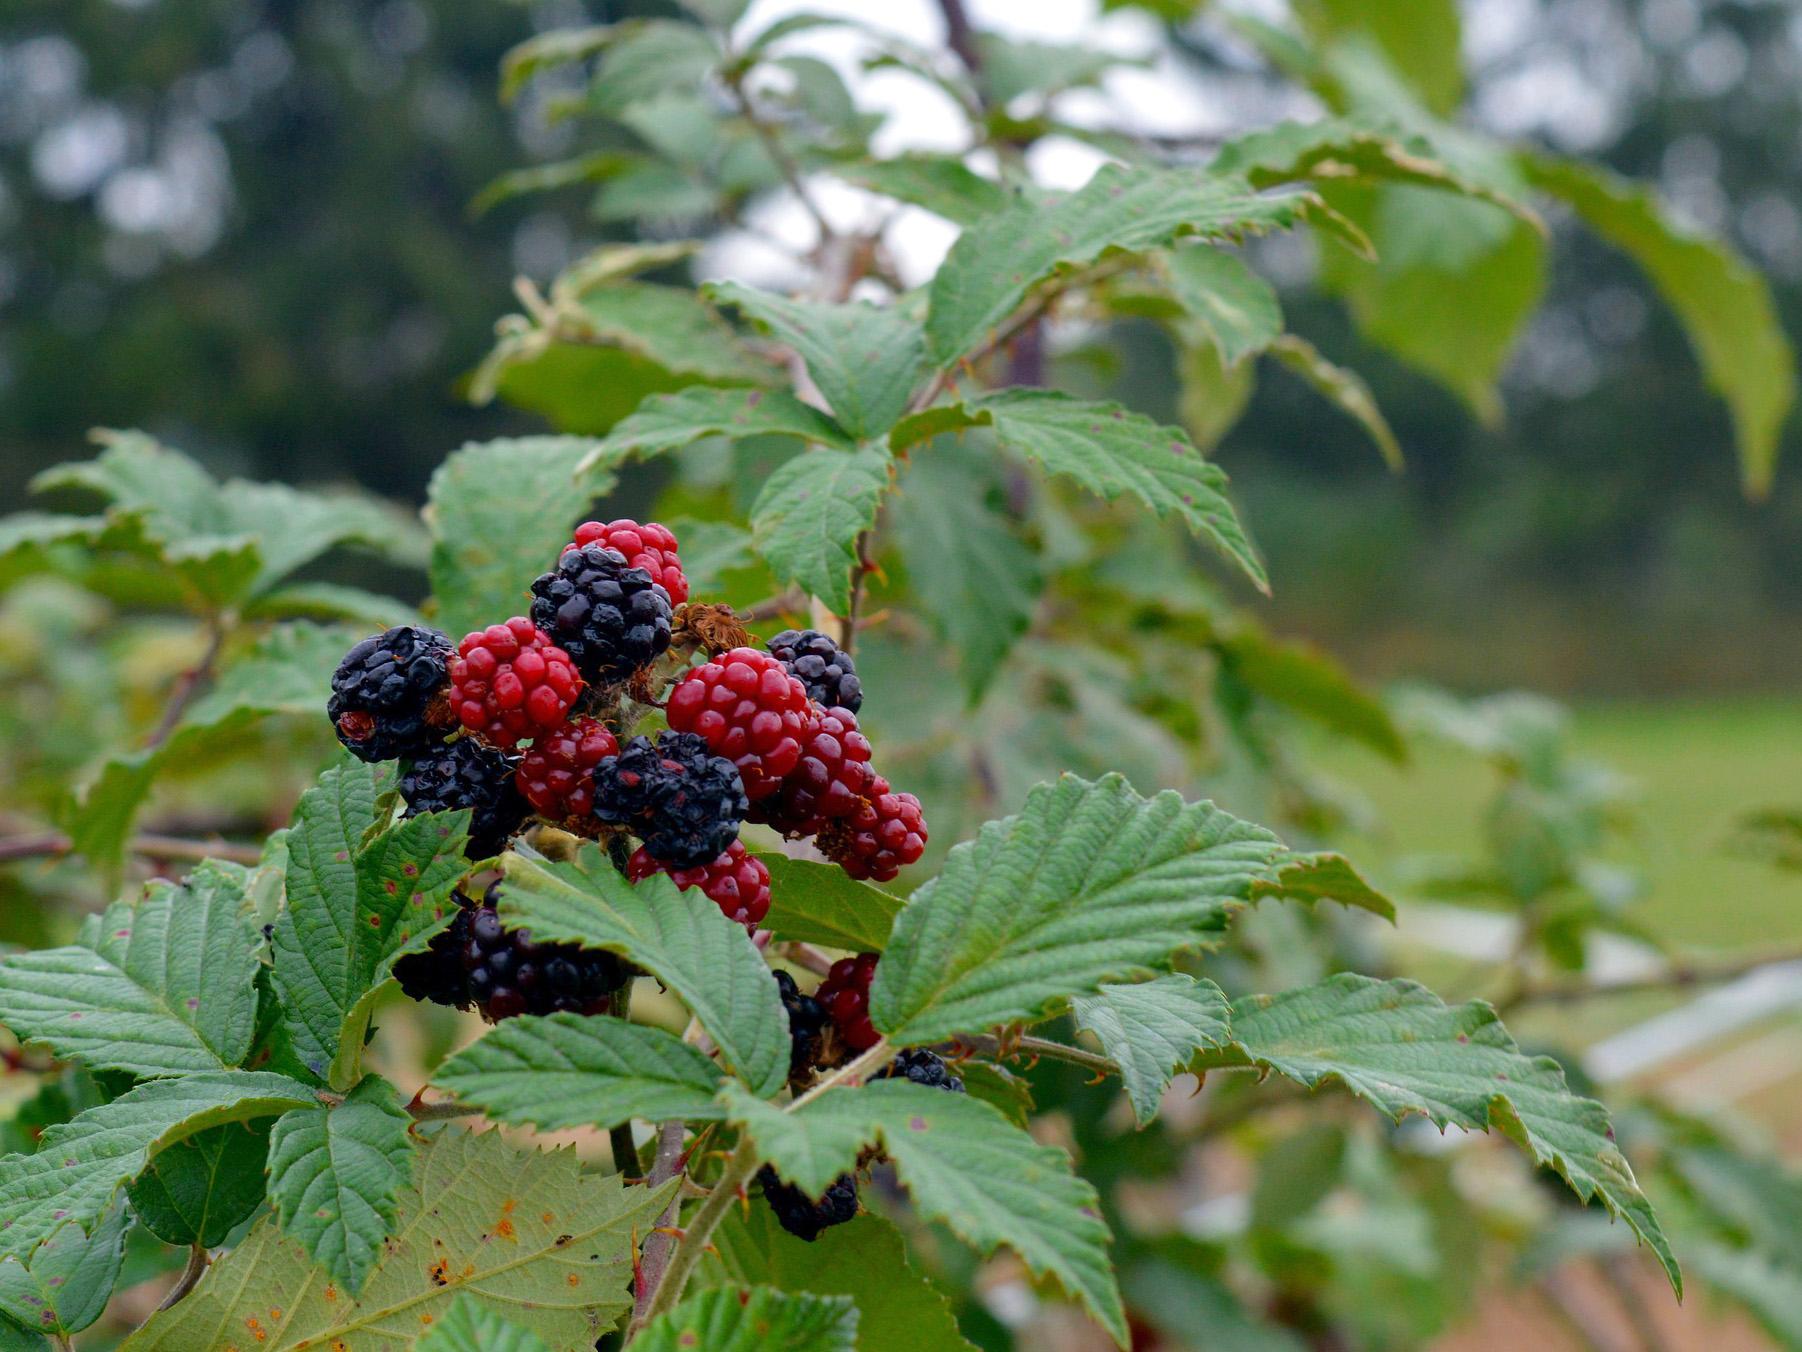 Invasive species - blackberry